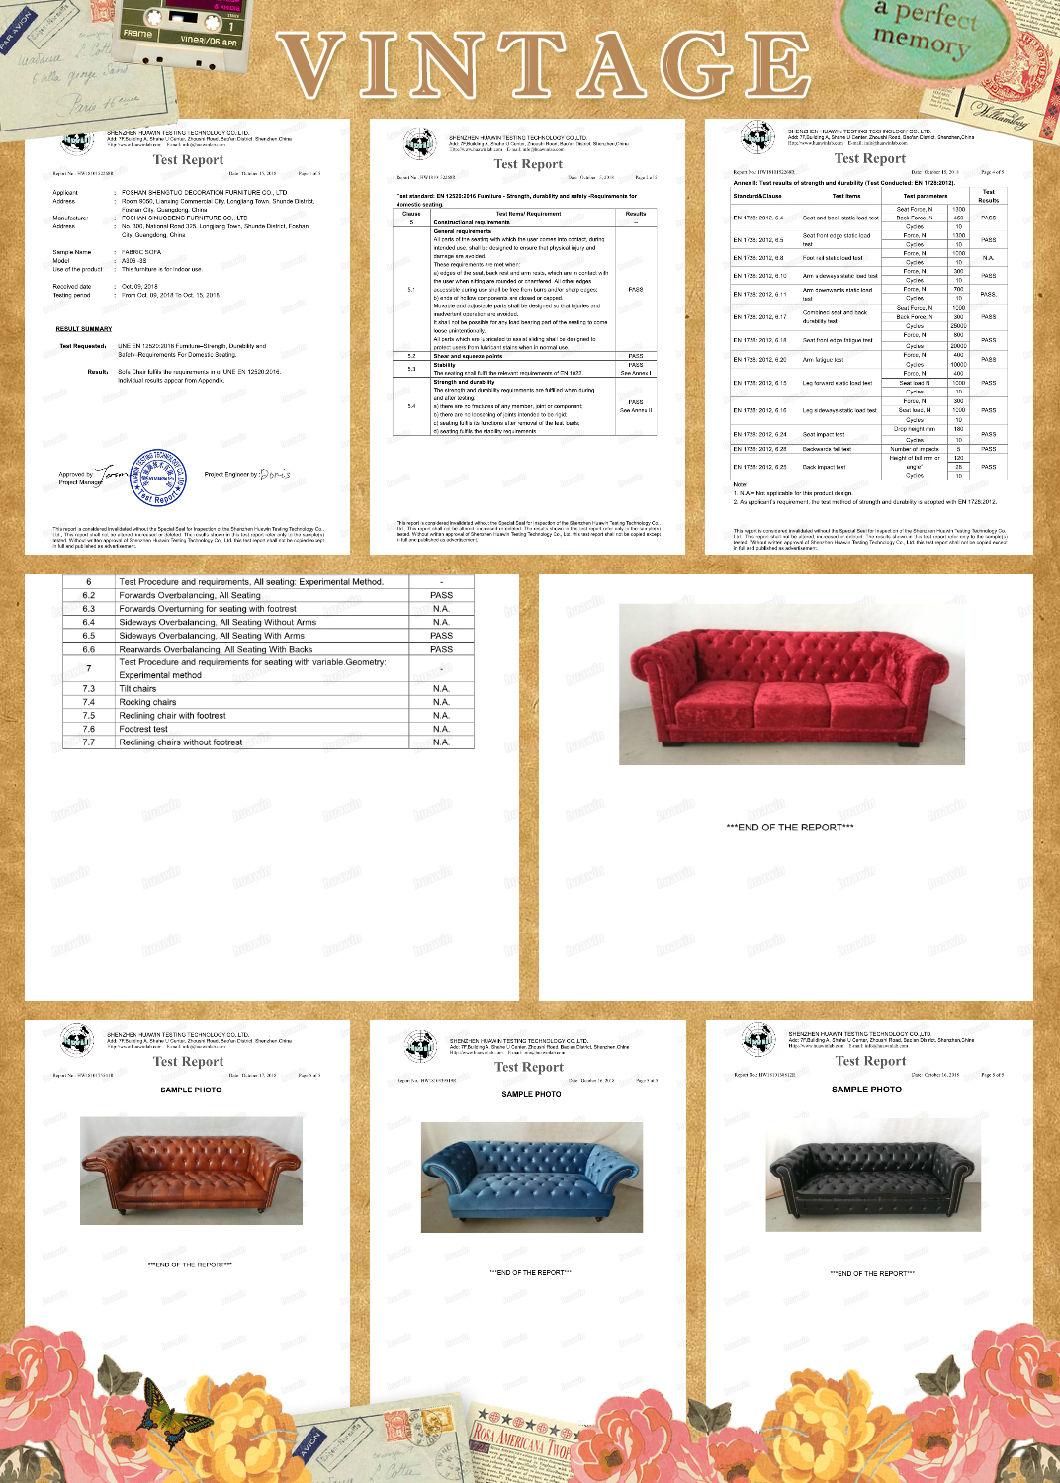 Factory Price Leather Sofa Couch Full Leather Living Room Furniture European Design Furniture Corner Sofa